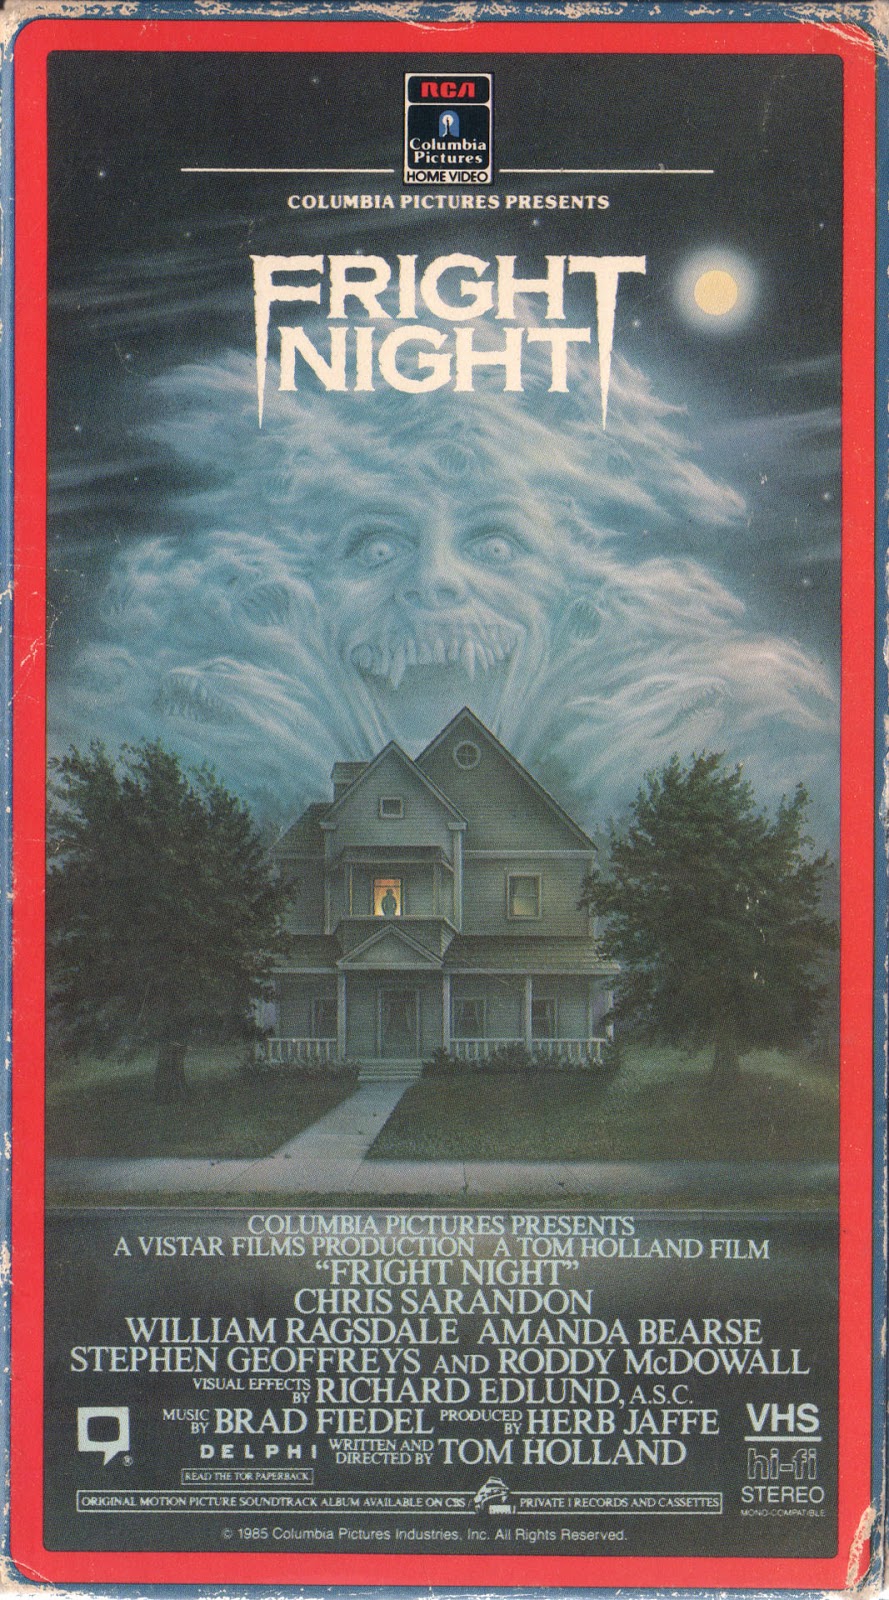 Happyotter: FRIGHT NIGHT (1985)